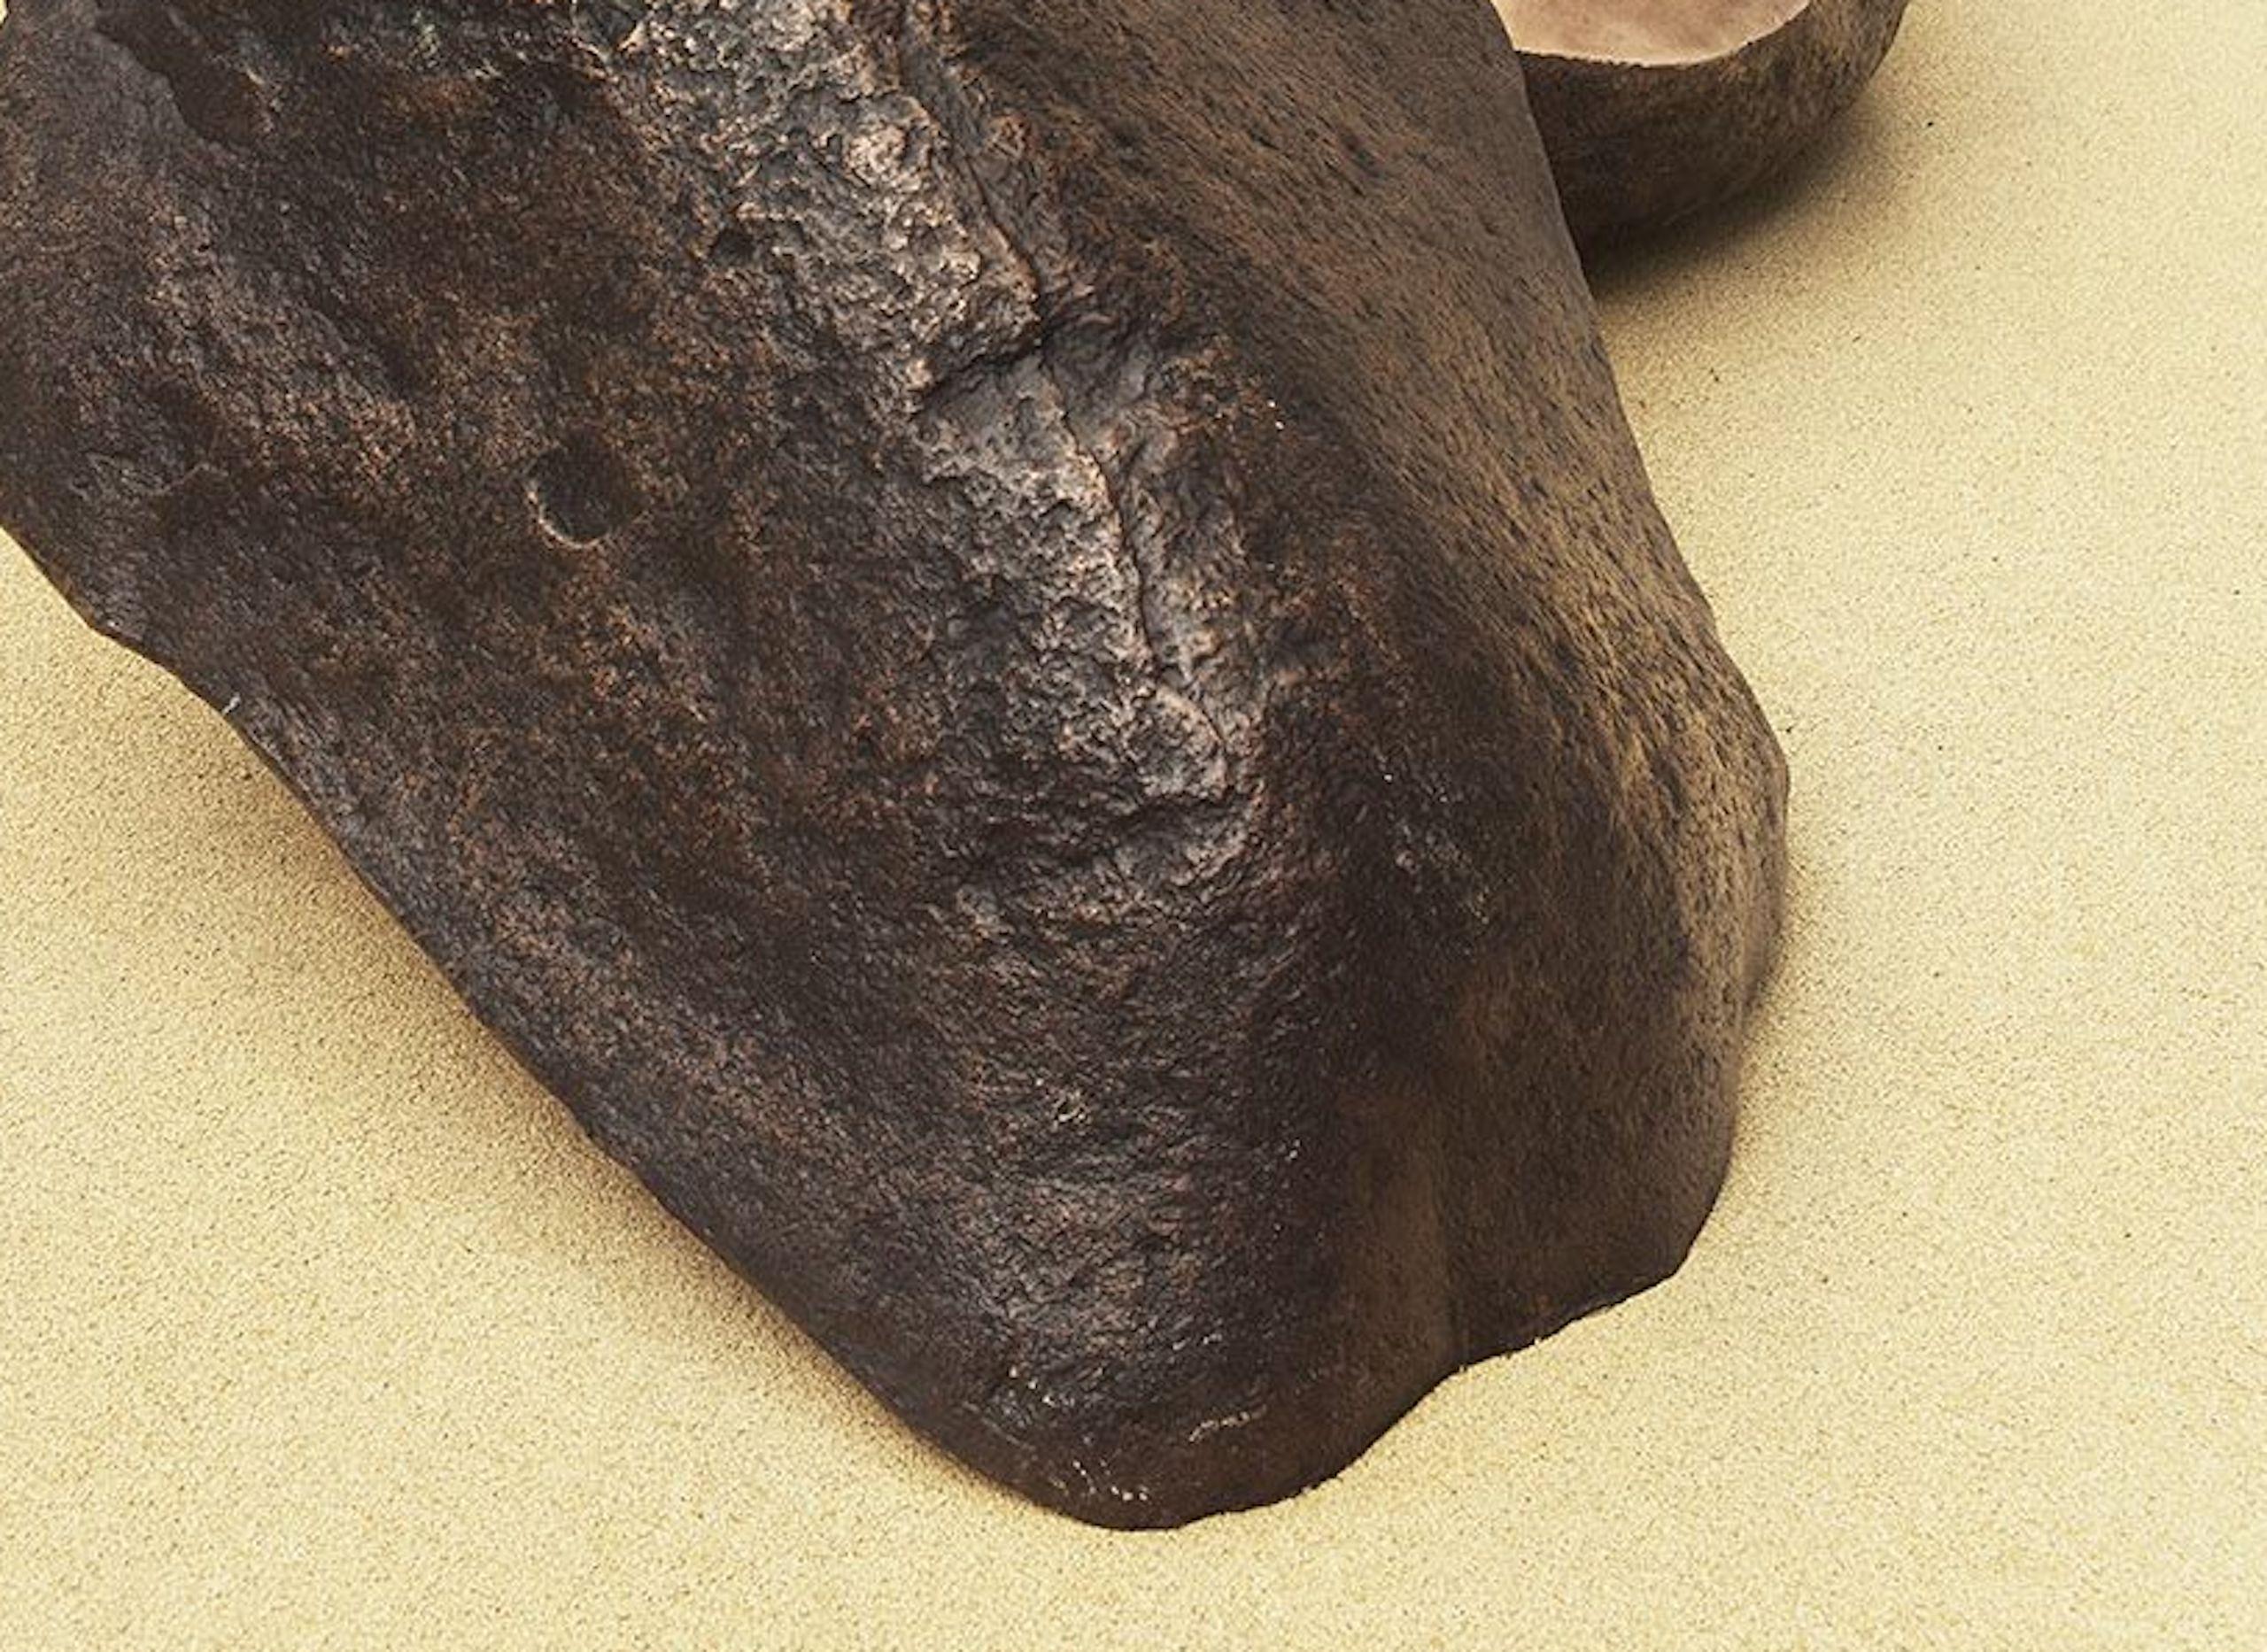 Boulder #2 - The Slide by Tom Price - Rock-like bronze sculpture, smooth For Sale 2